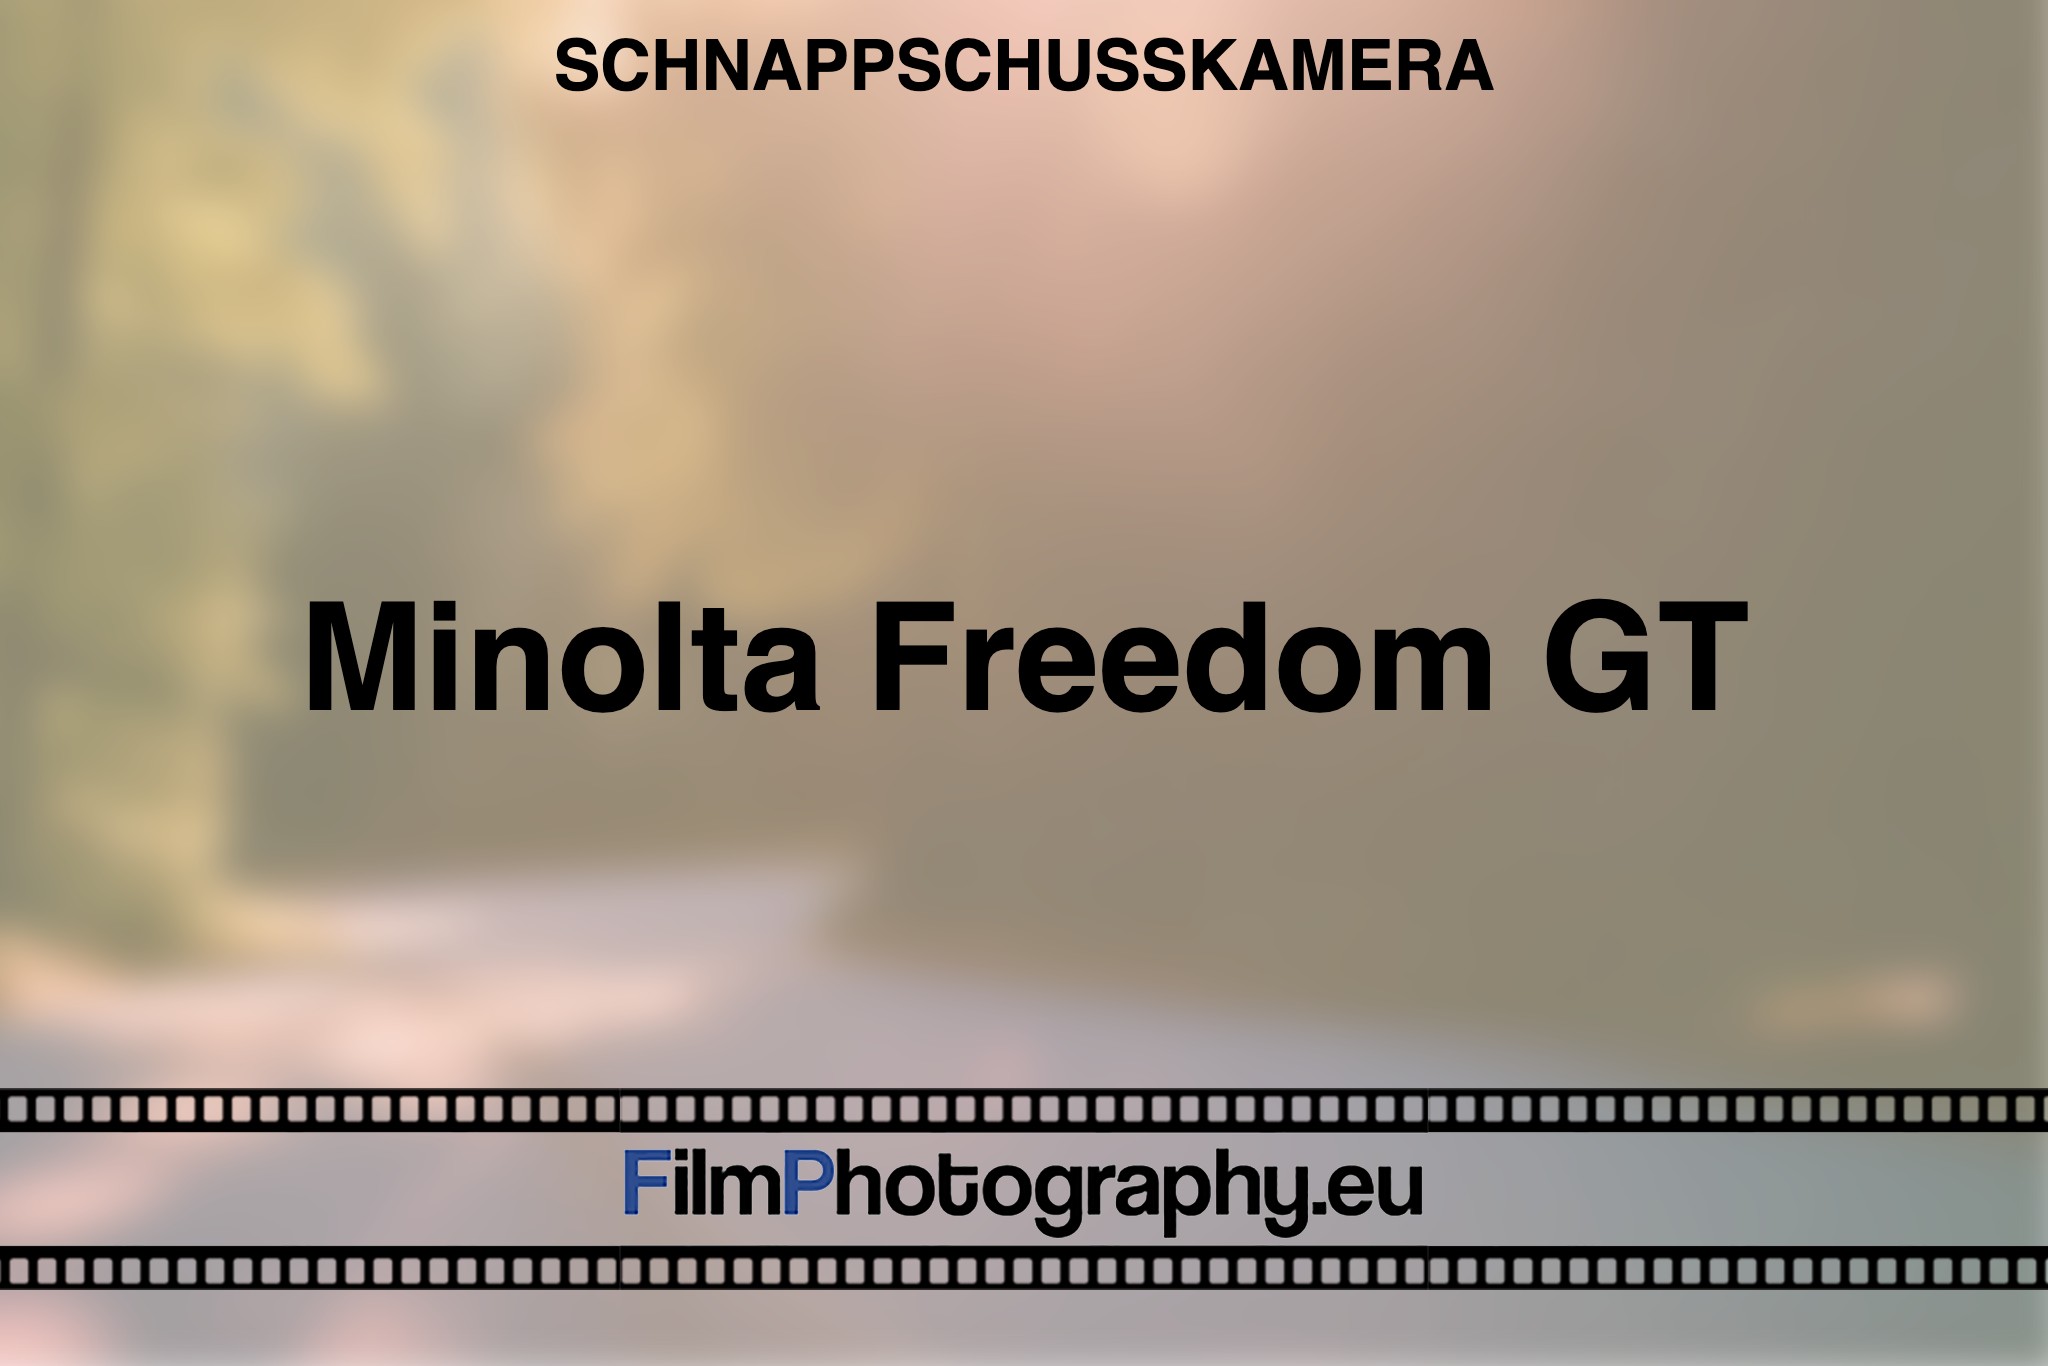 minolta-freedom-gt-schnappschusskamera-bnv